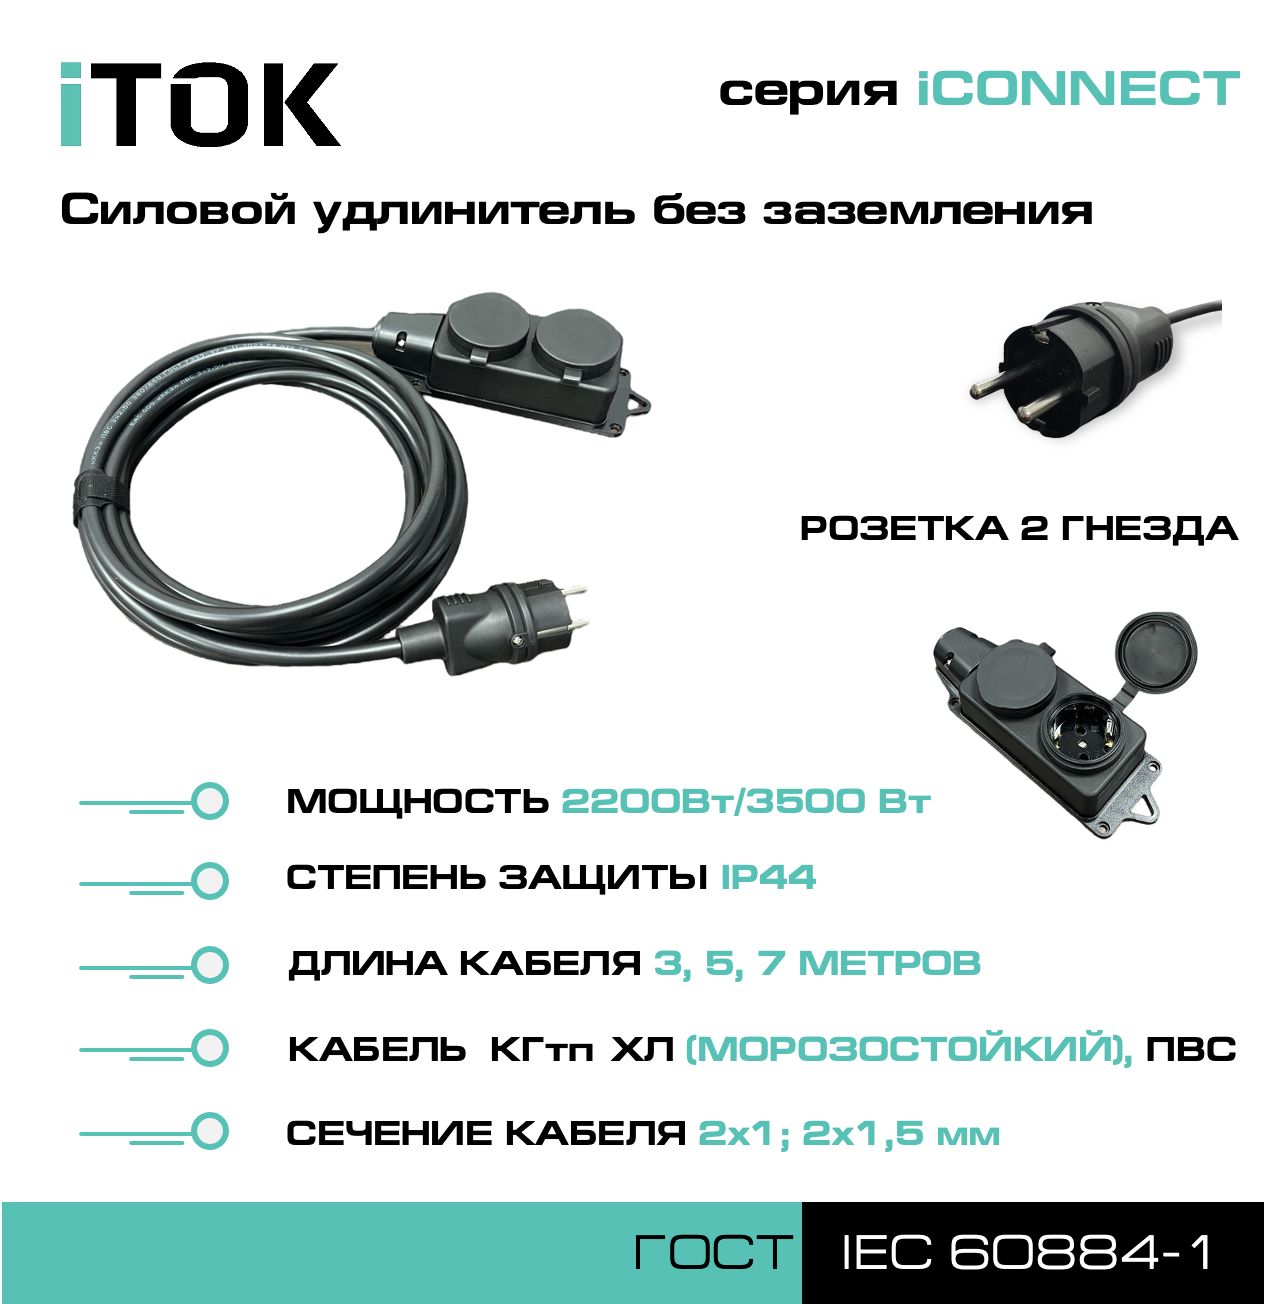 Удлинитель без земли серии iTOK iCONNECT ПВС 2х1,5 мм 2 гнезда IP44 5 м кабель itok